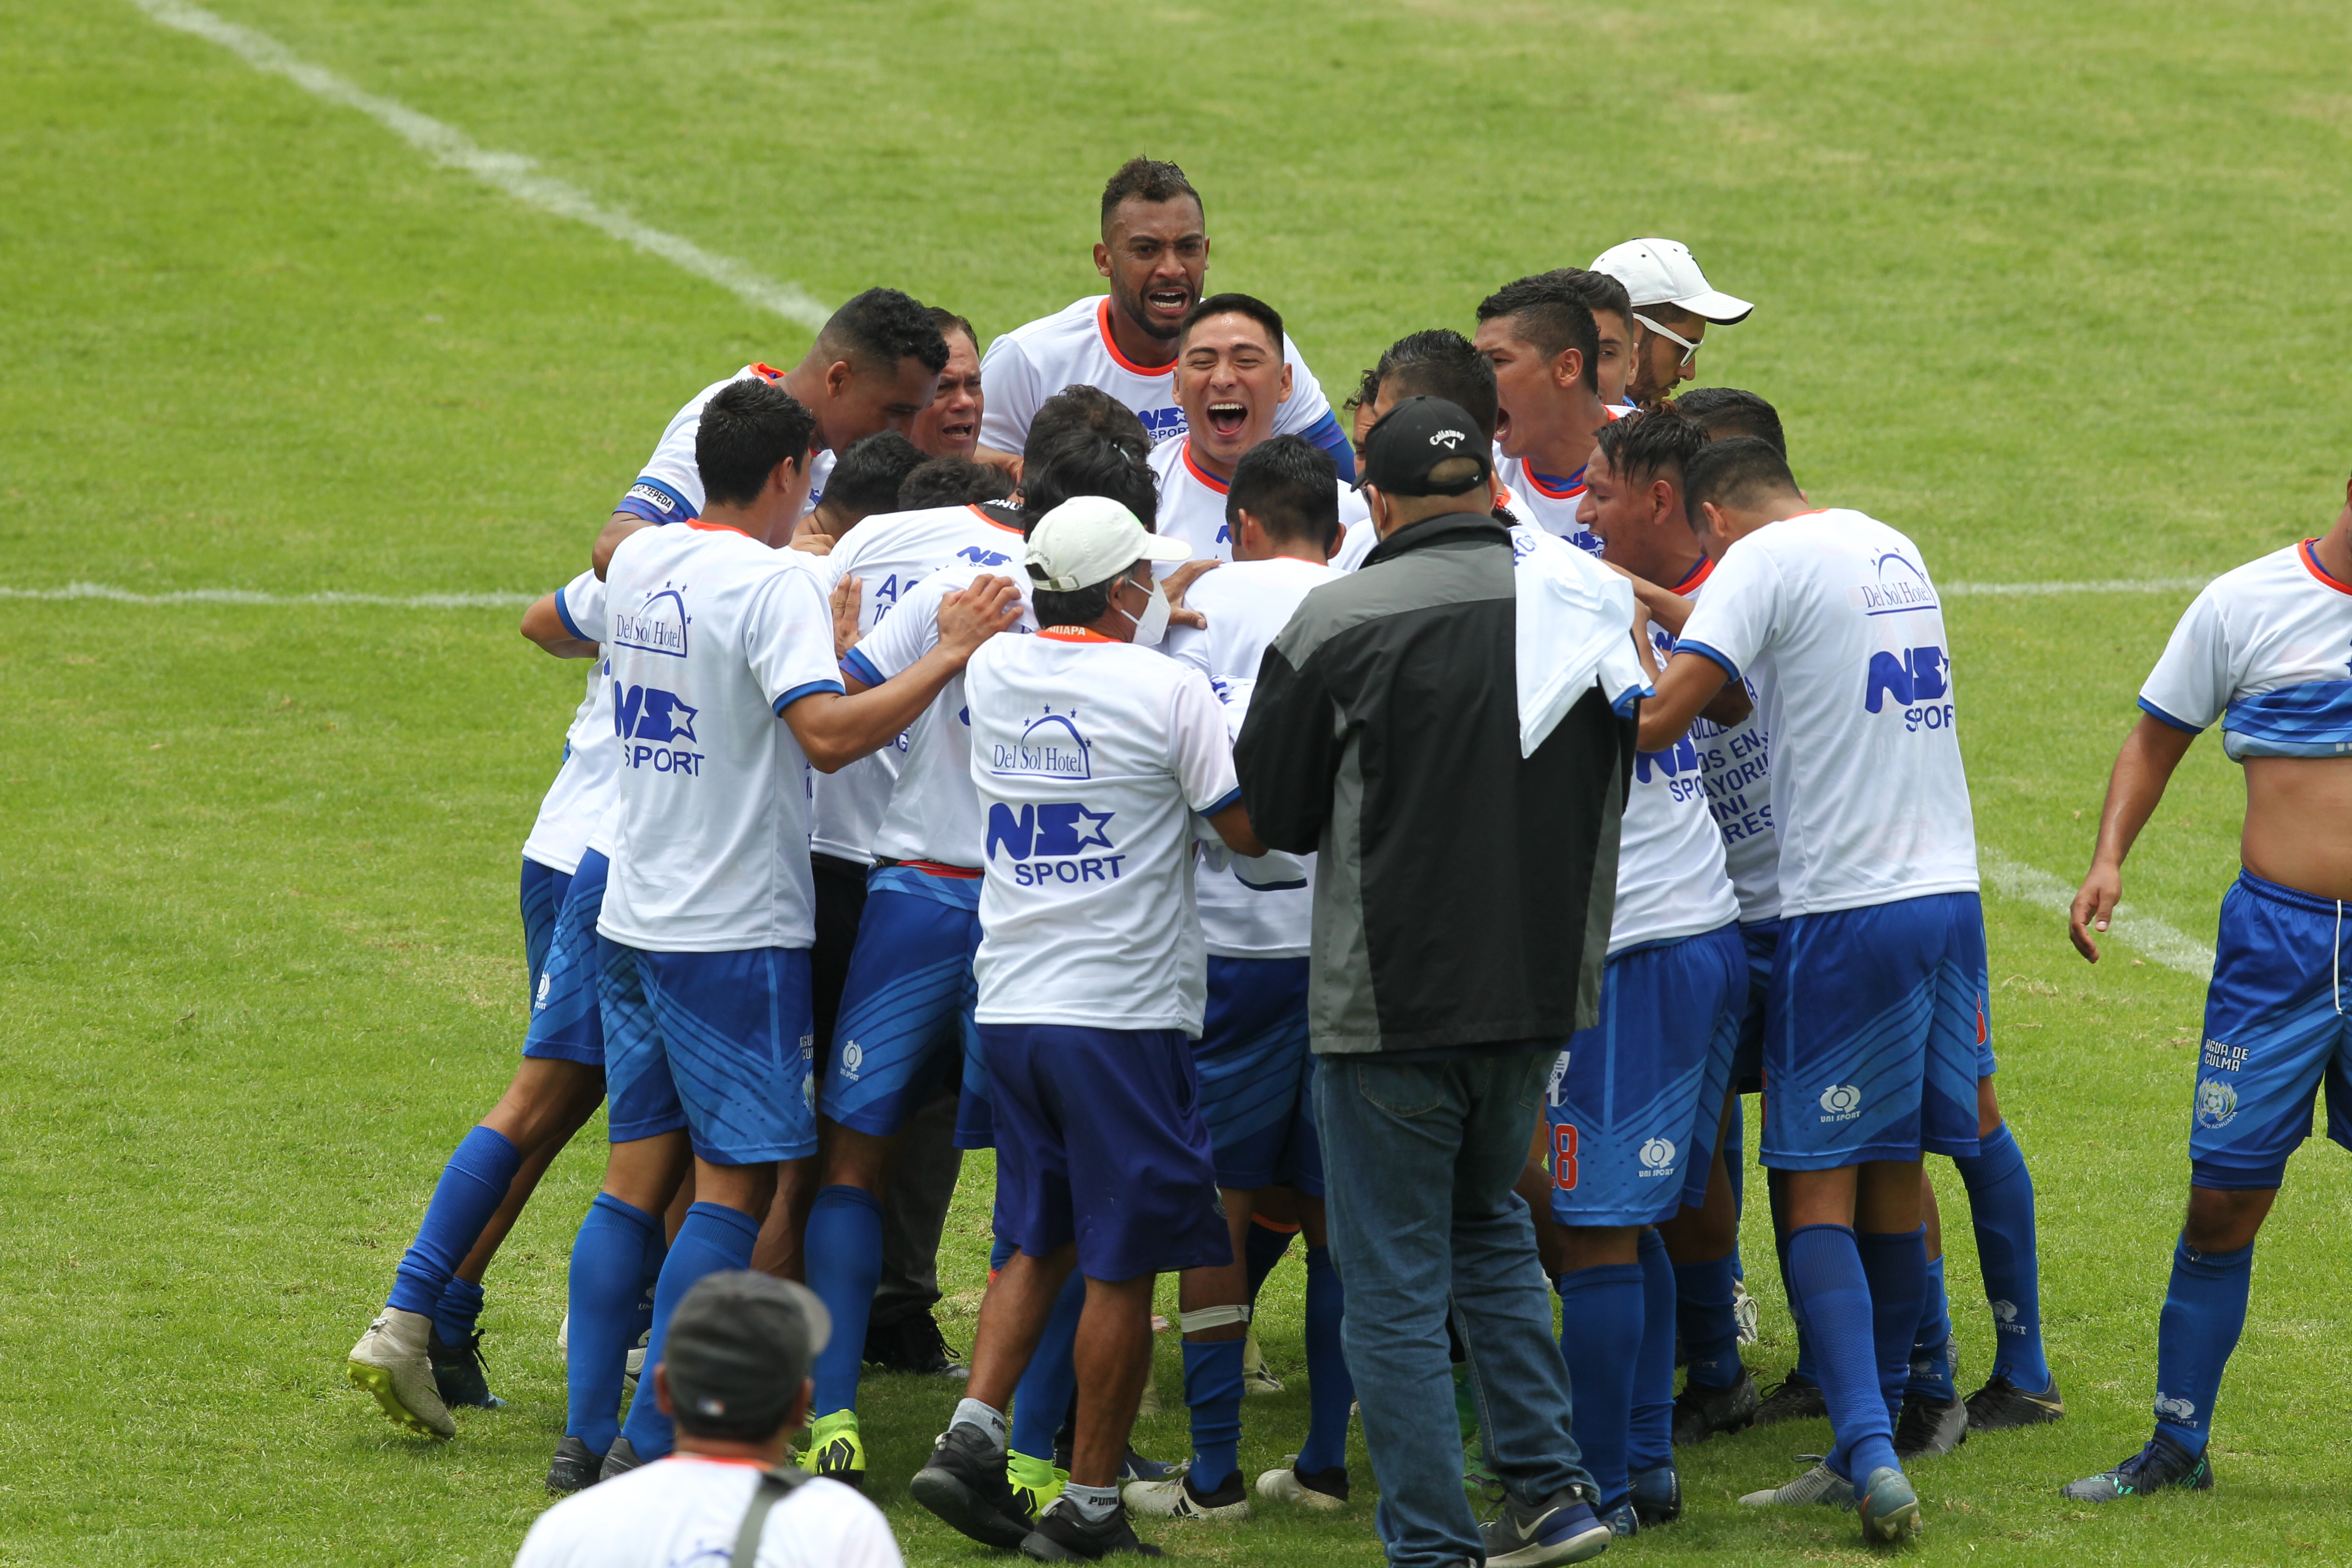 Los jugadores de Achuapa celebran después de lograr el ascenso. (Foto Prensa Libre: Norvin Mendoza)